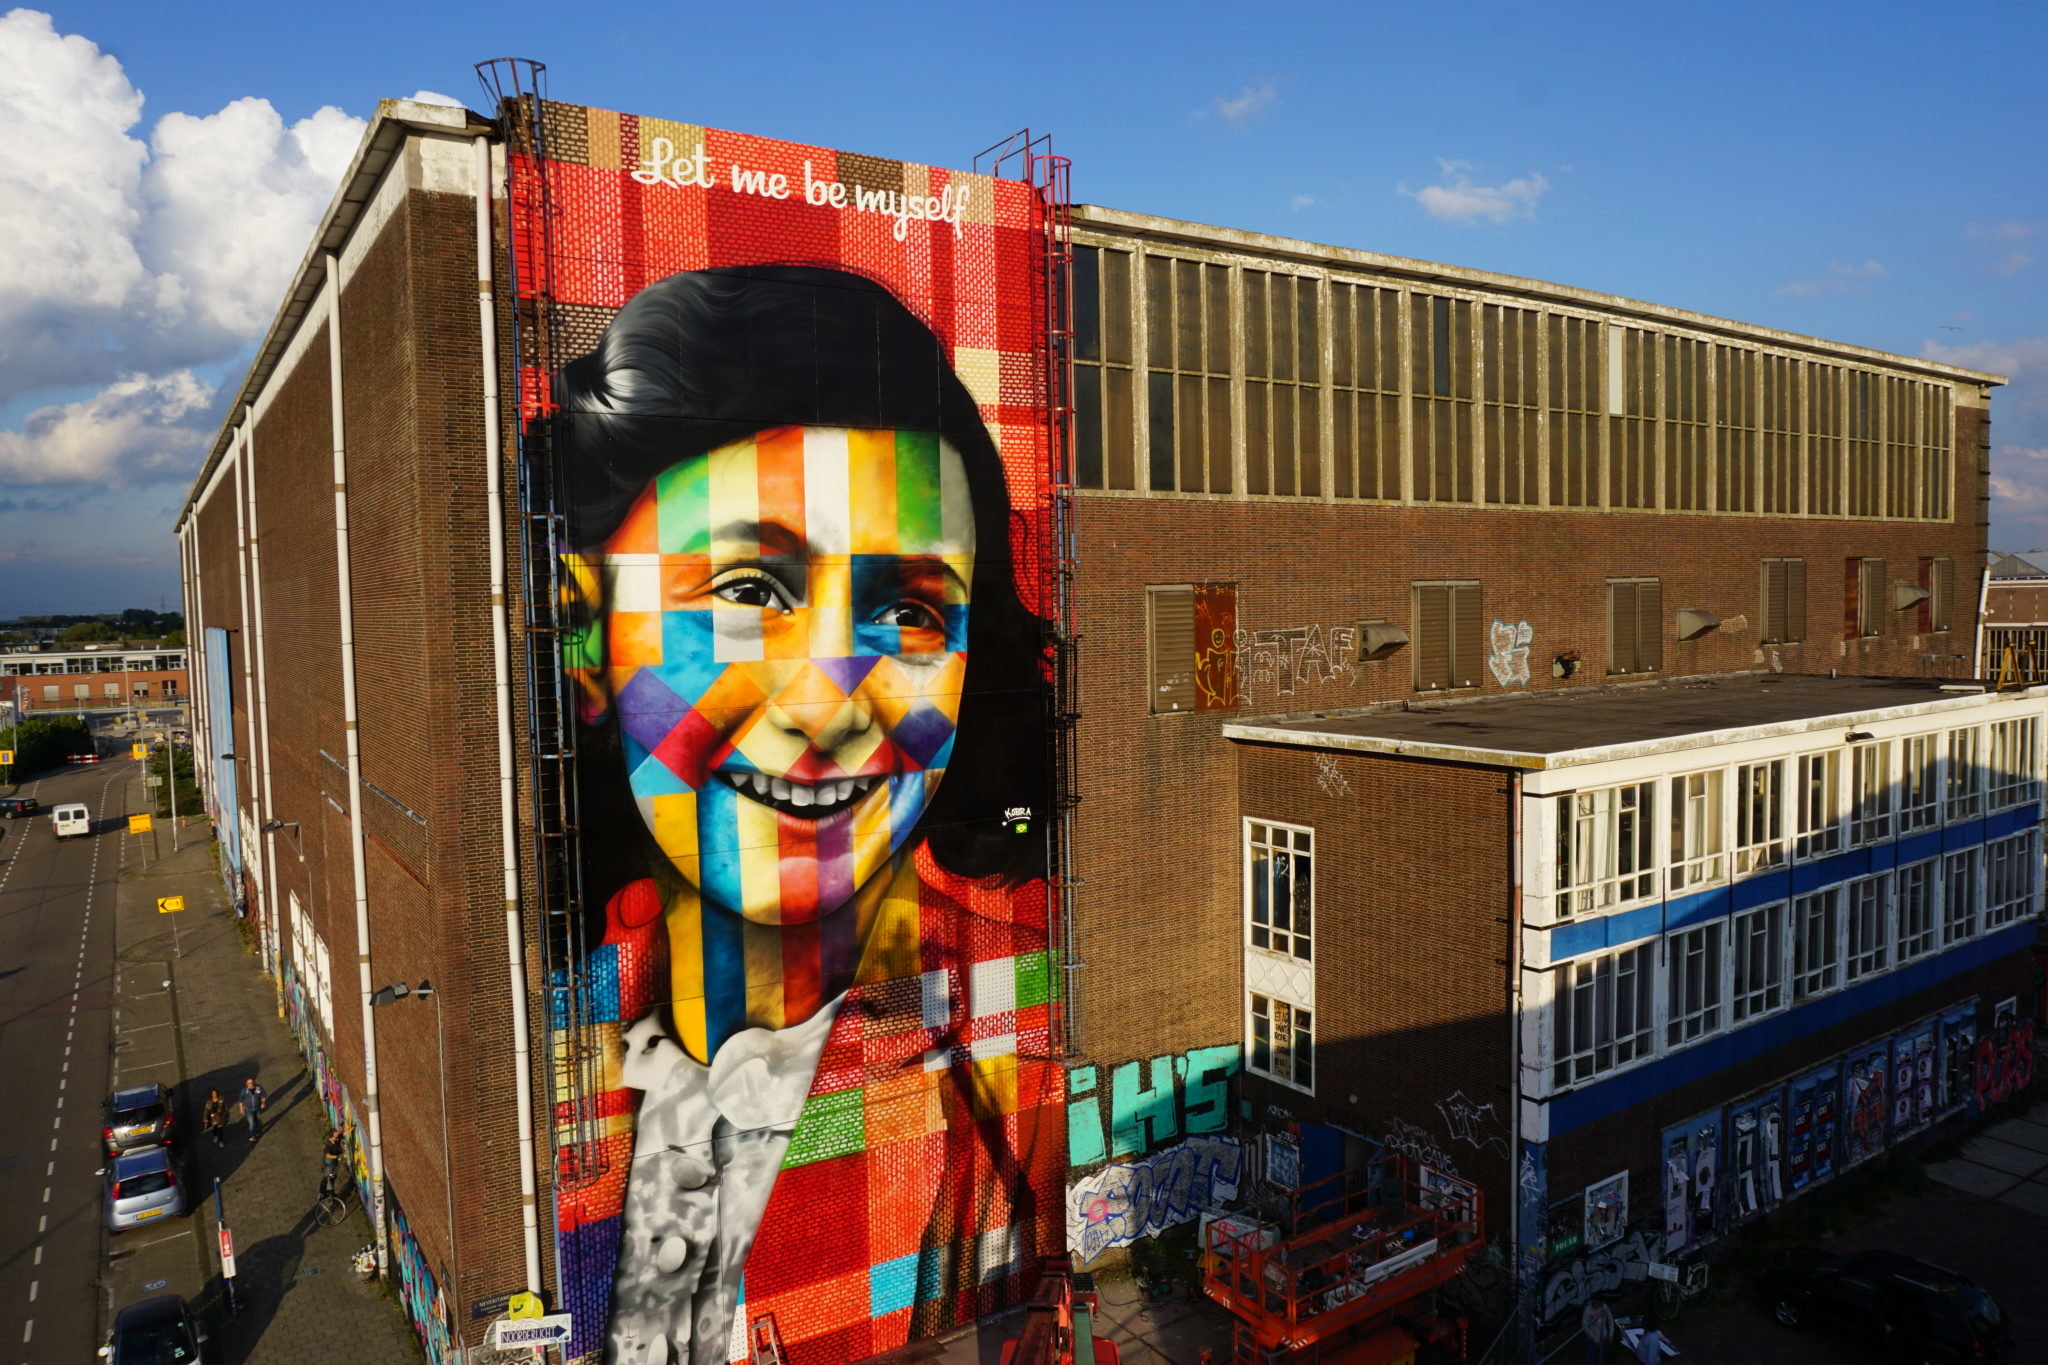 The Anne Frank mural in Amsterdam, by Eduardo Kobra